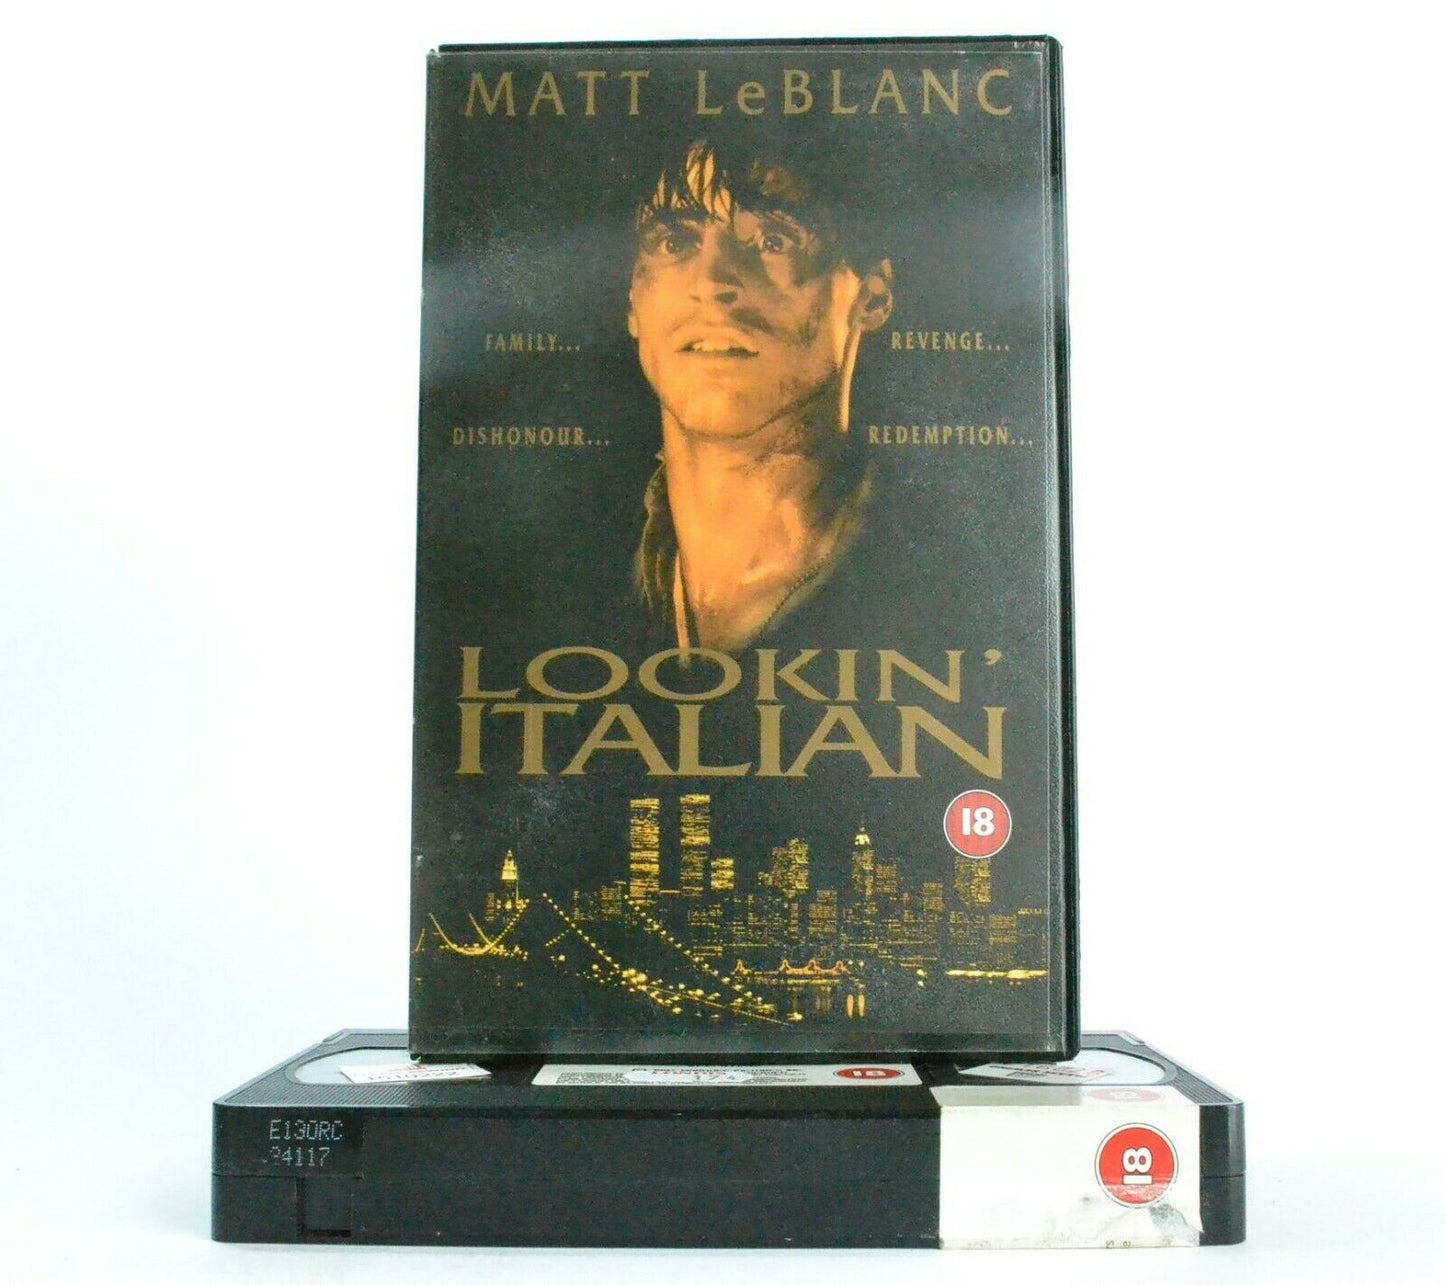 Lookin' Italian: (1994) Thriller - Seductive Lady-Killer - Matt LeBlanc - VHS-